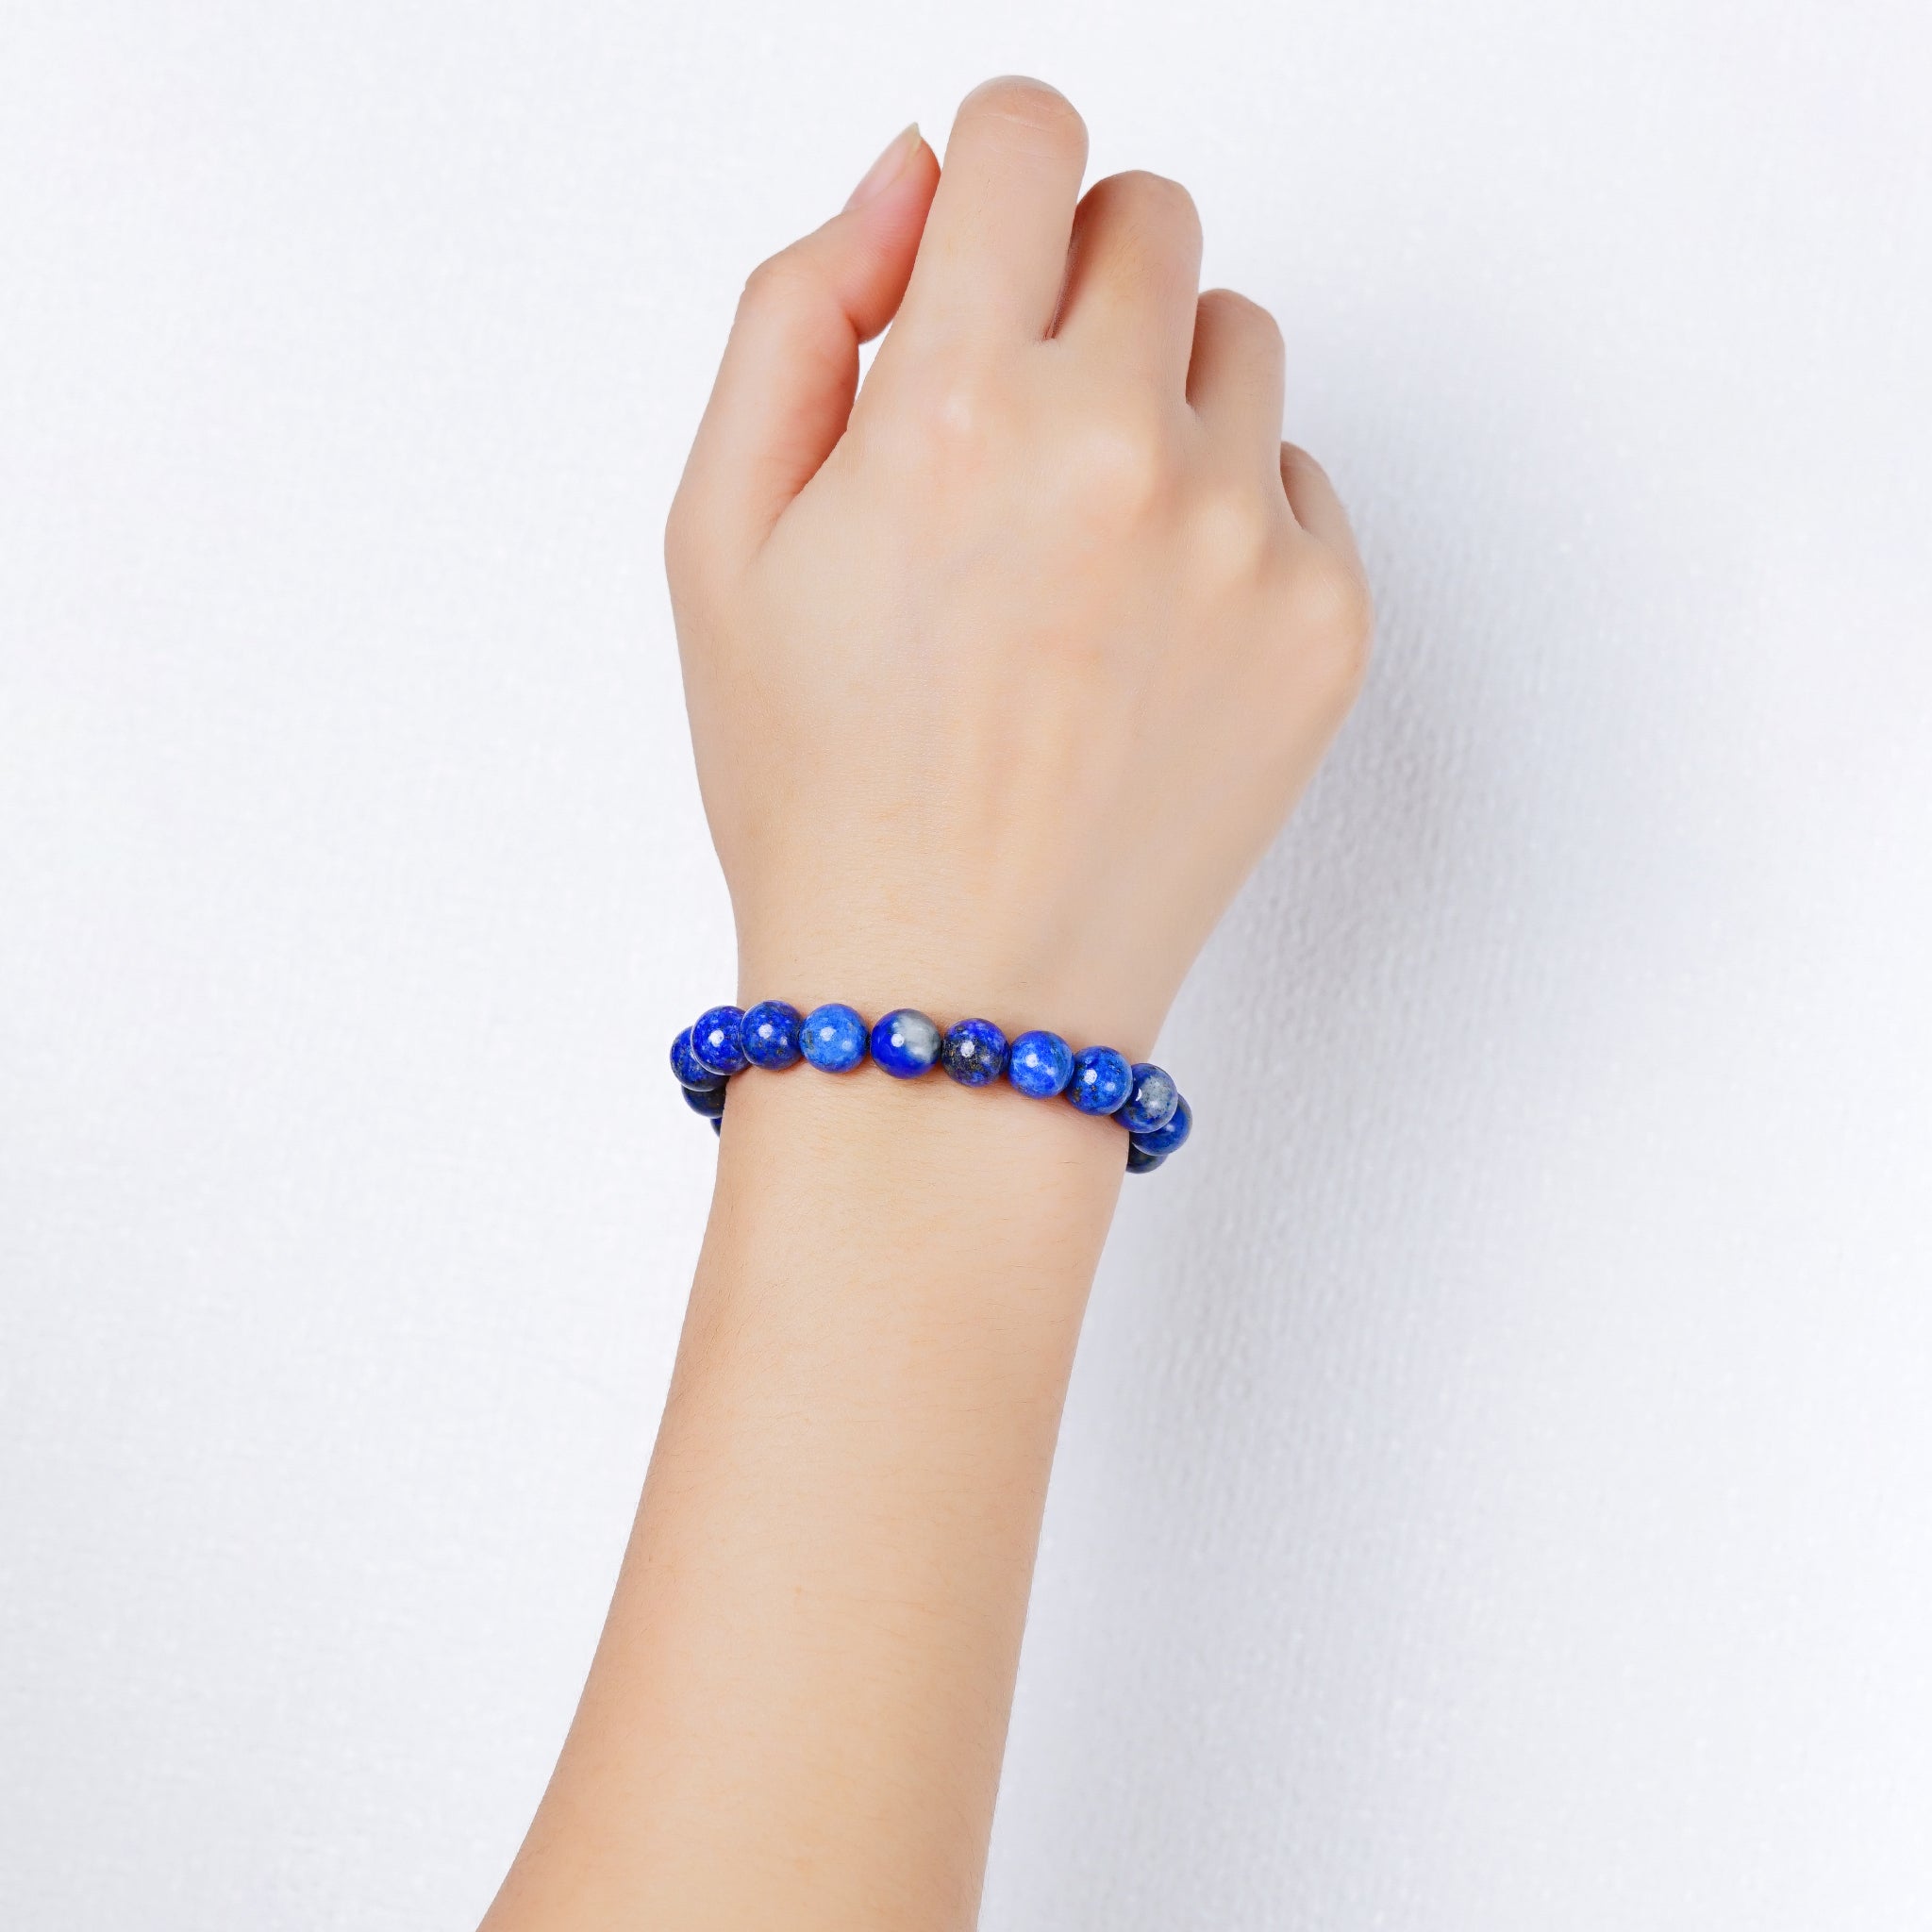 Adjustable Gemstone Bracelet 8mm - Lapis Lazuli